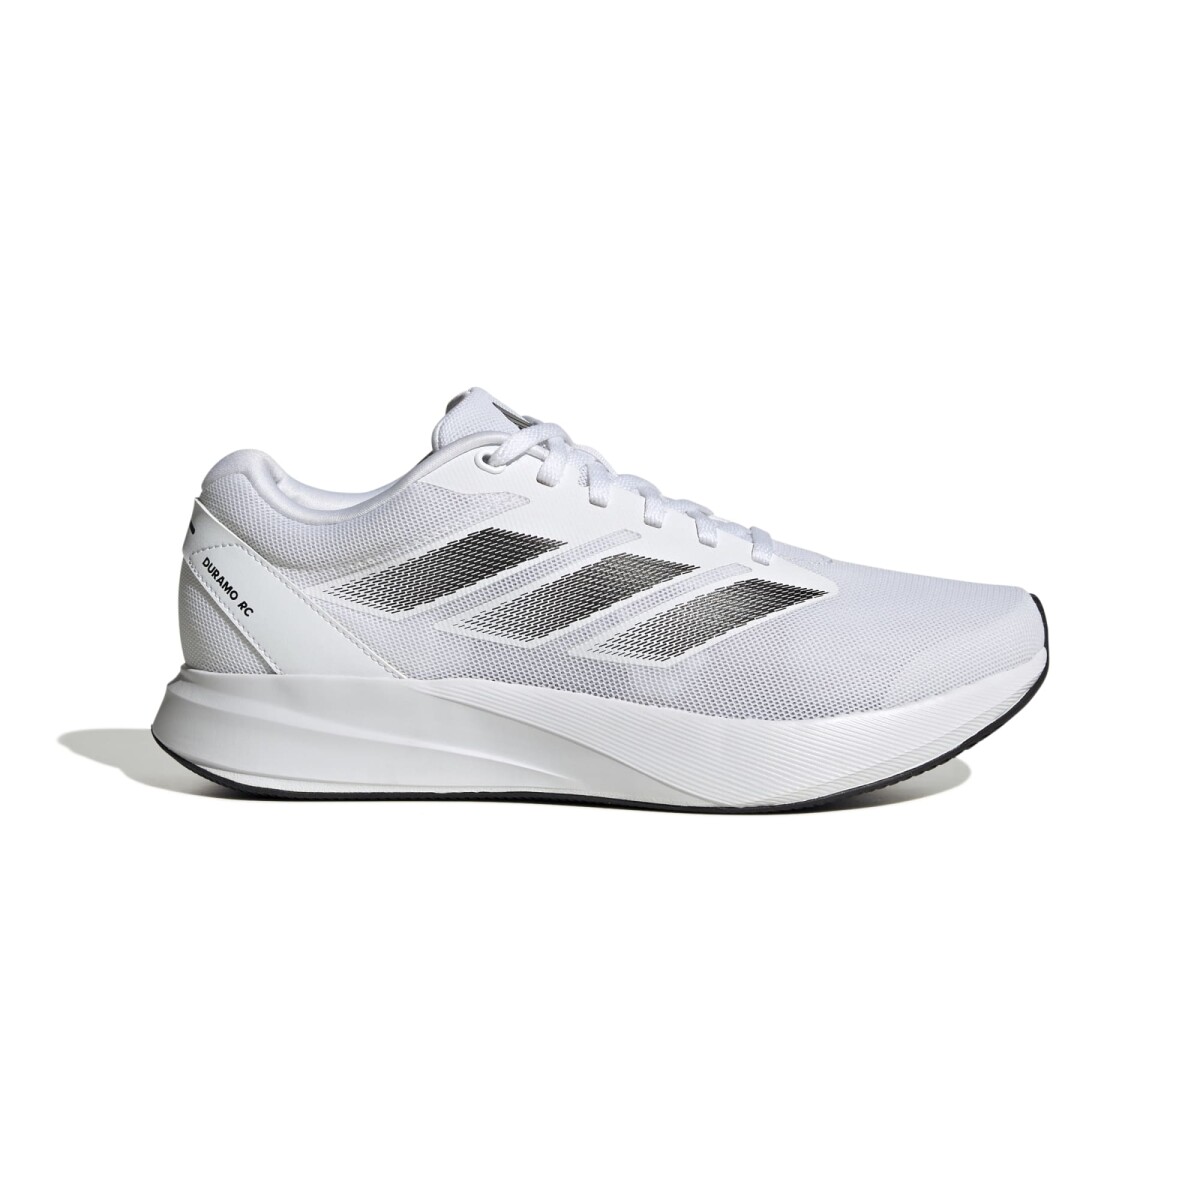 Championes Adidas Unisex - Duramo RC - ADID2702 - WHITE/CORE BLACK/WHITE 